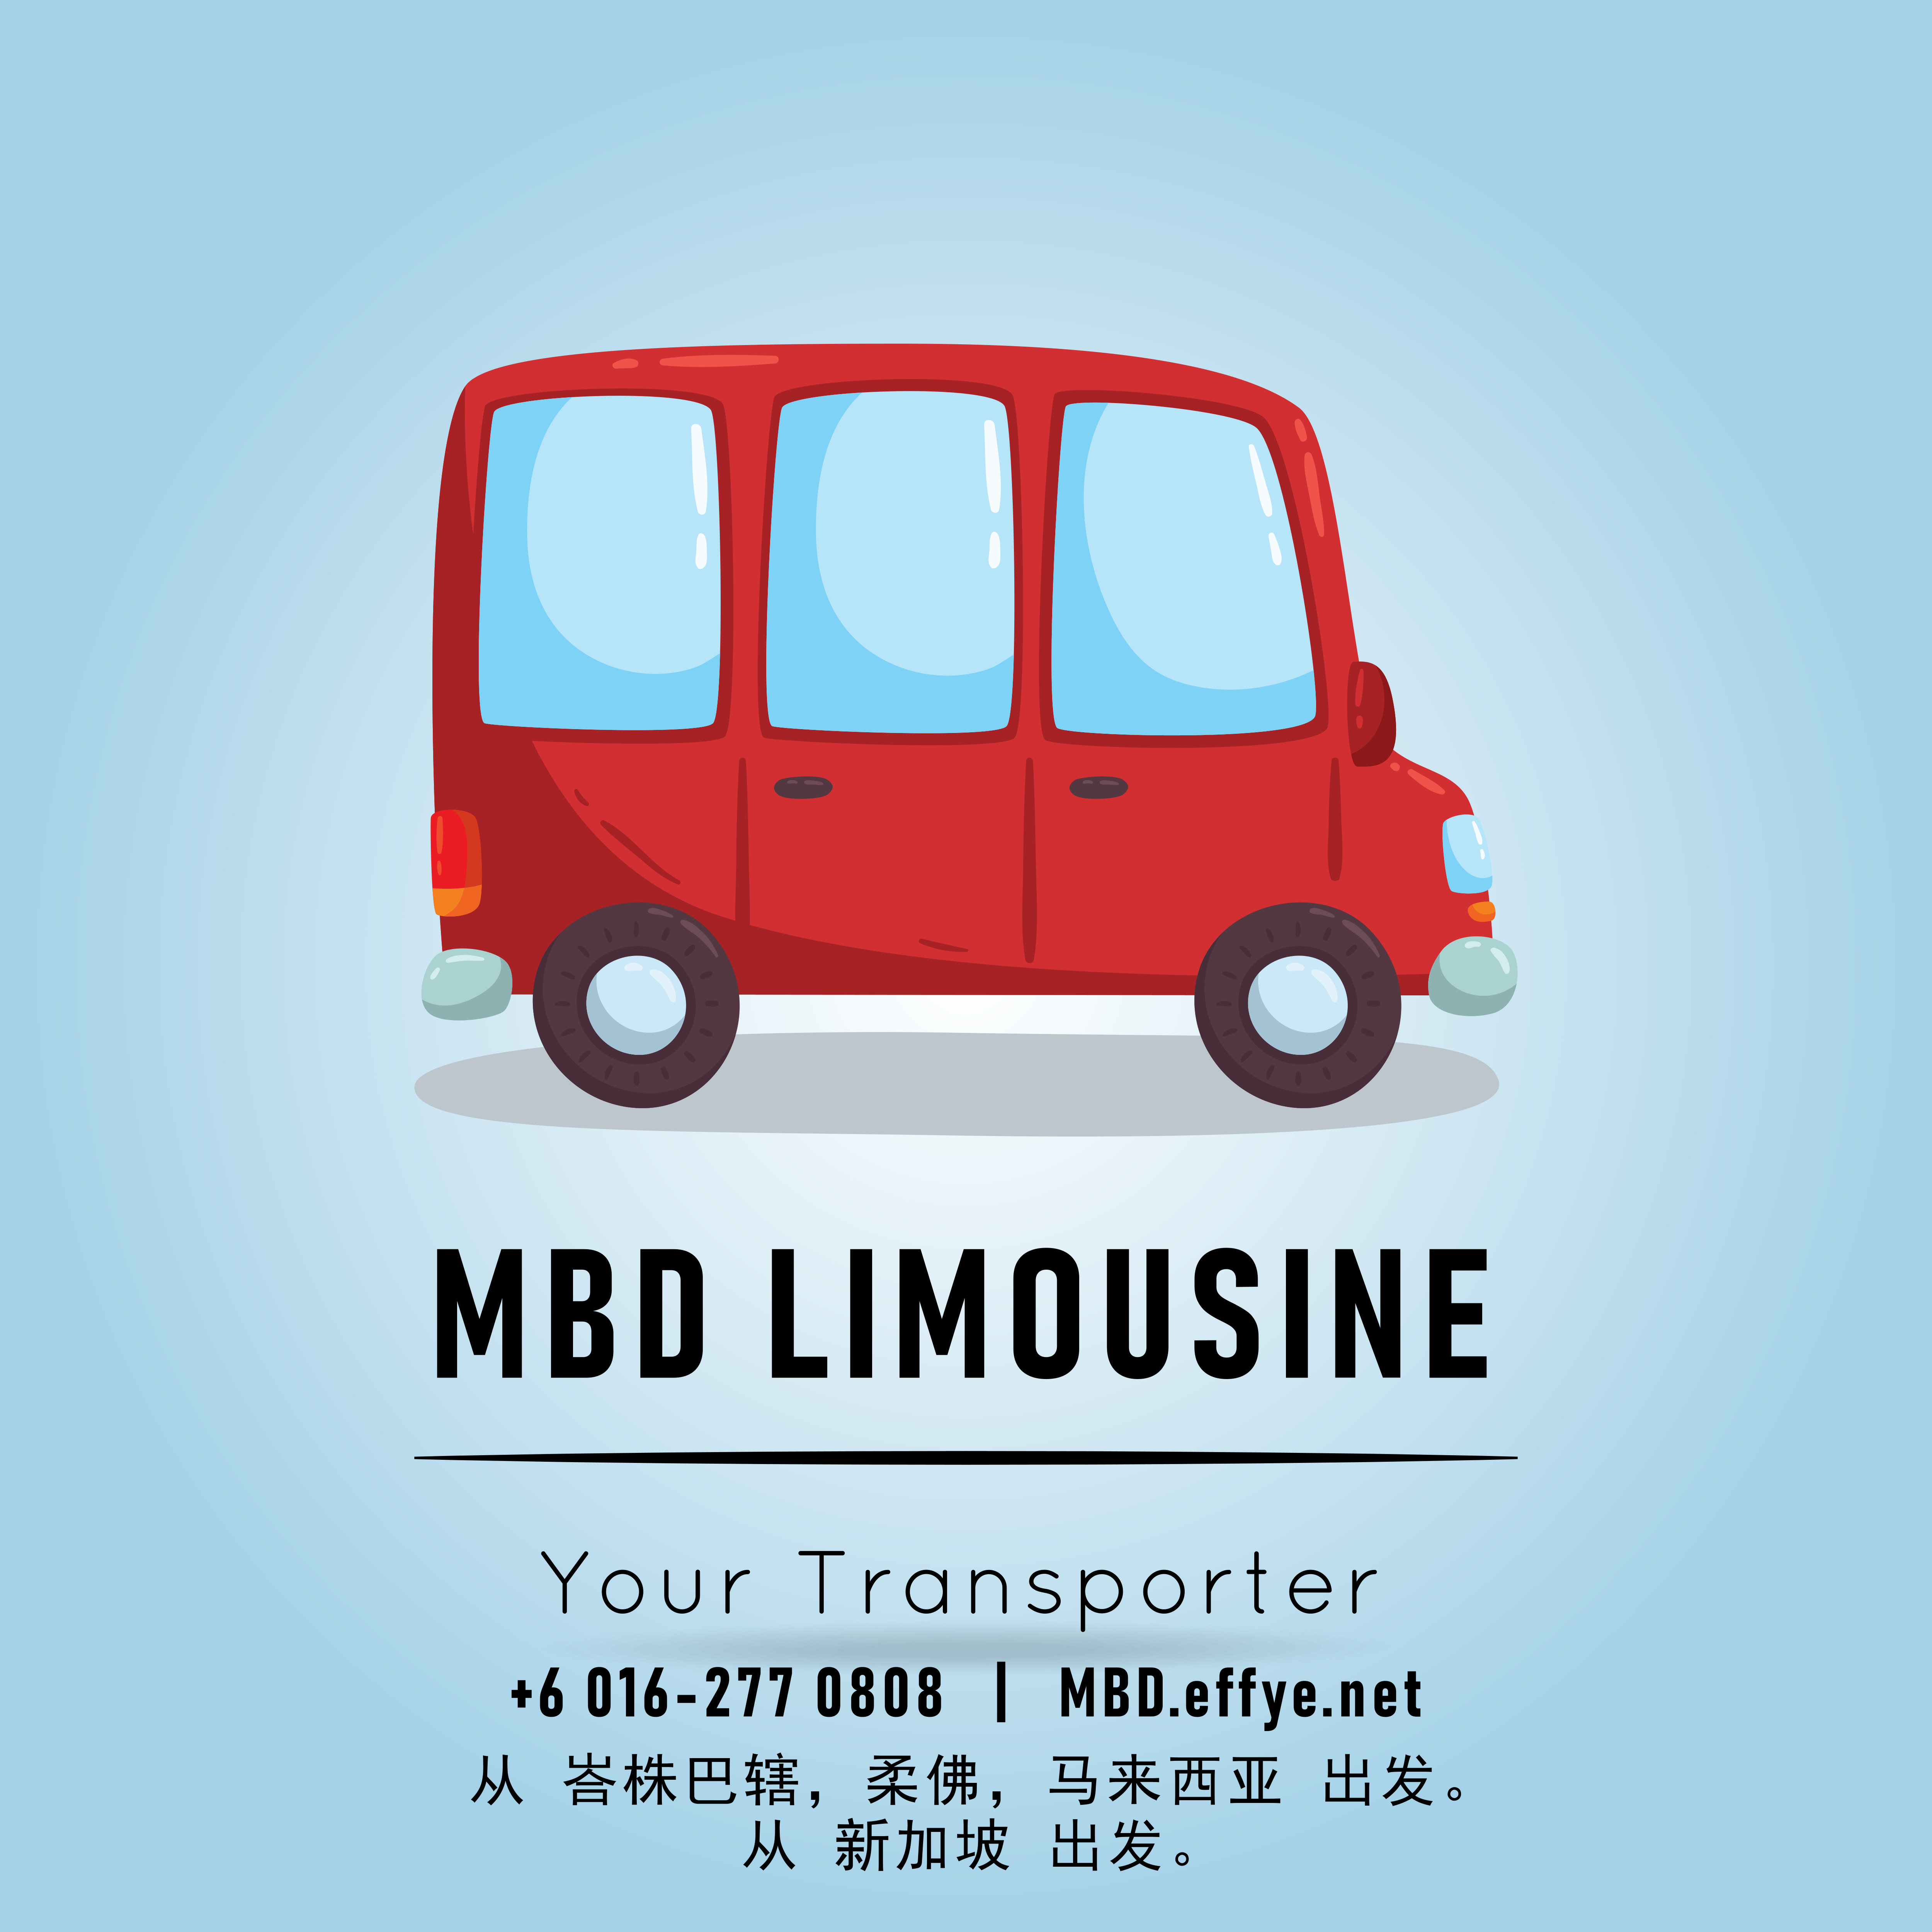 MBD Limousine 新山柔佛 载送服务 及 租车服务 出租汽车服务 马来西亚 新加坡 往返载送服务 机场接送 旅游接送 豪华休旅车出租 短程旅游 长途旅游 Logo A02